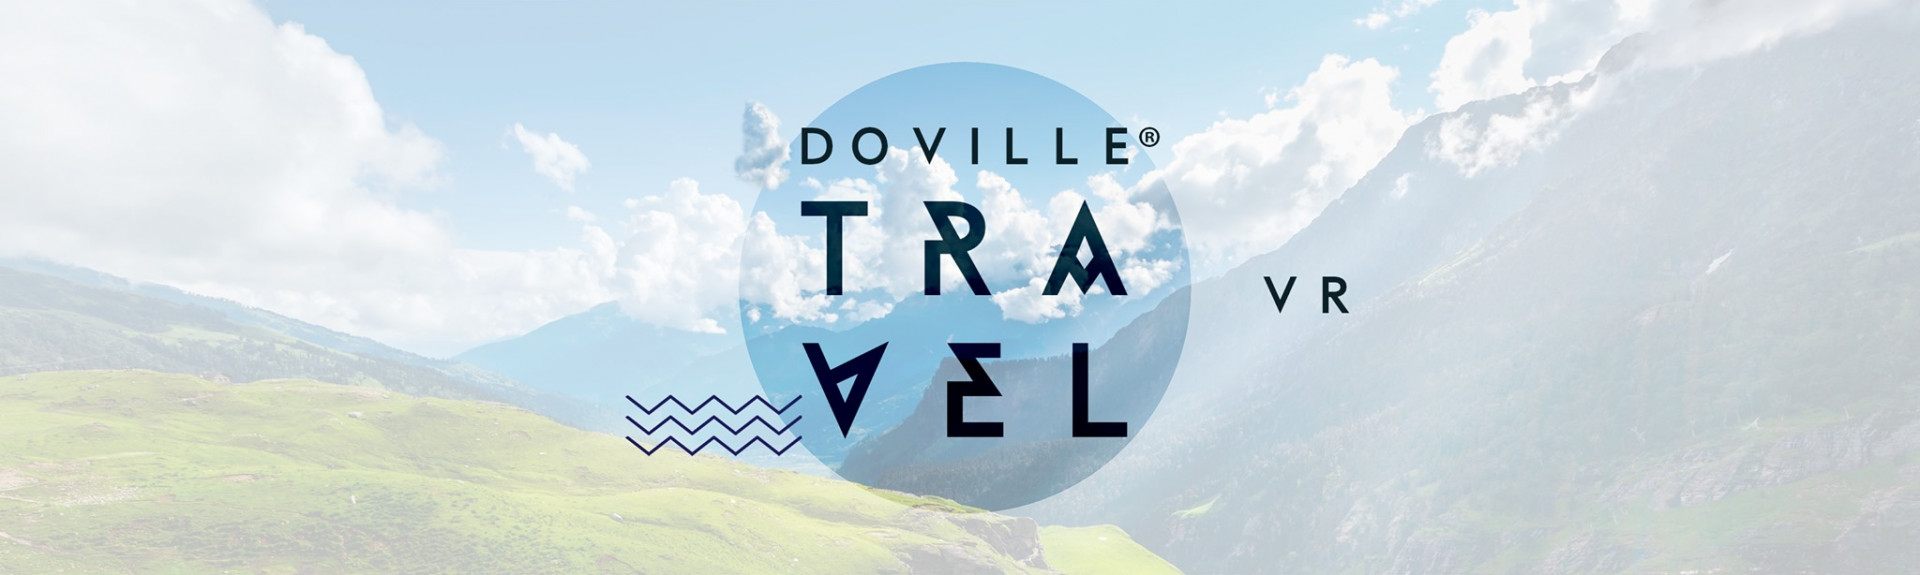 DoVille Travel (VR)